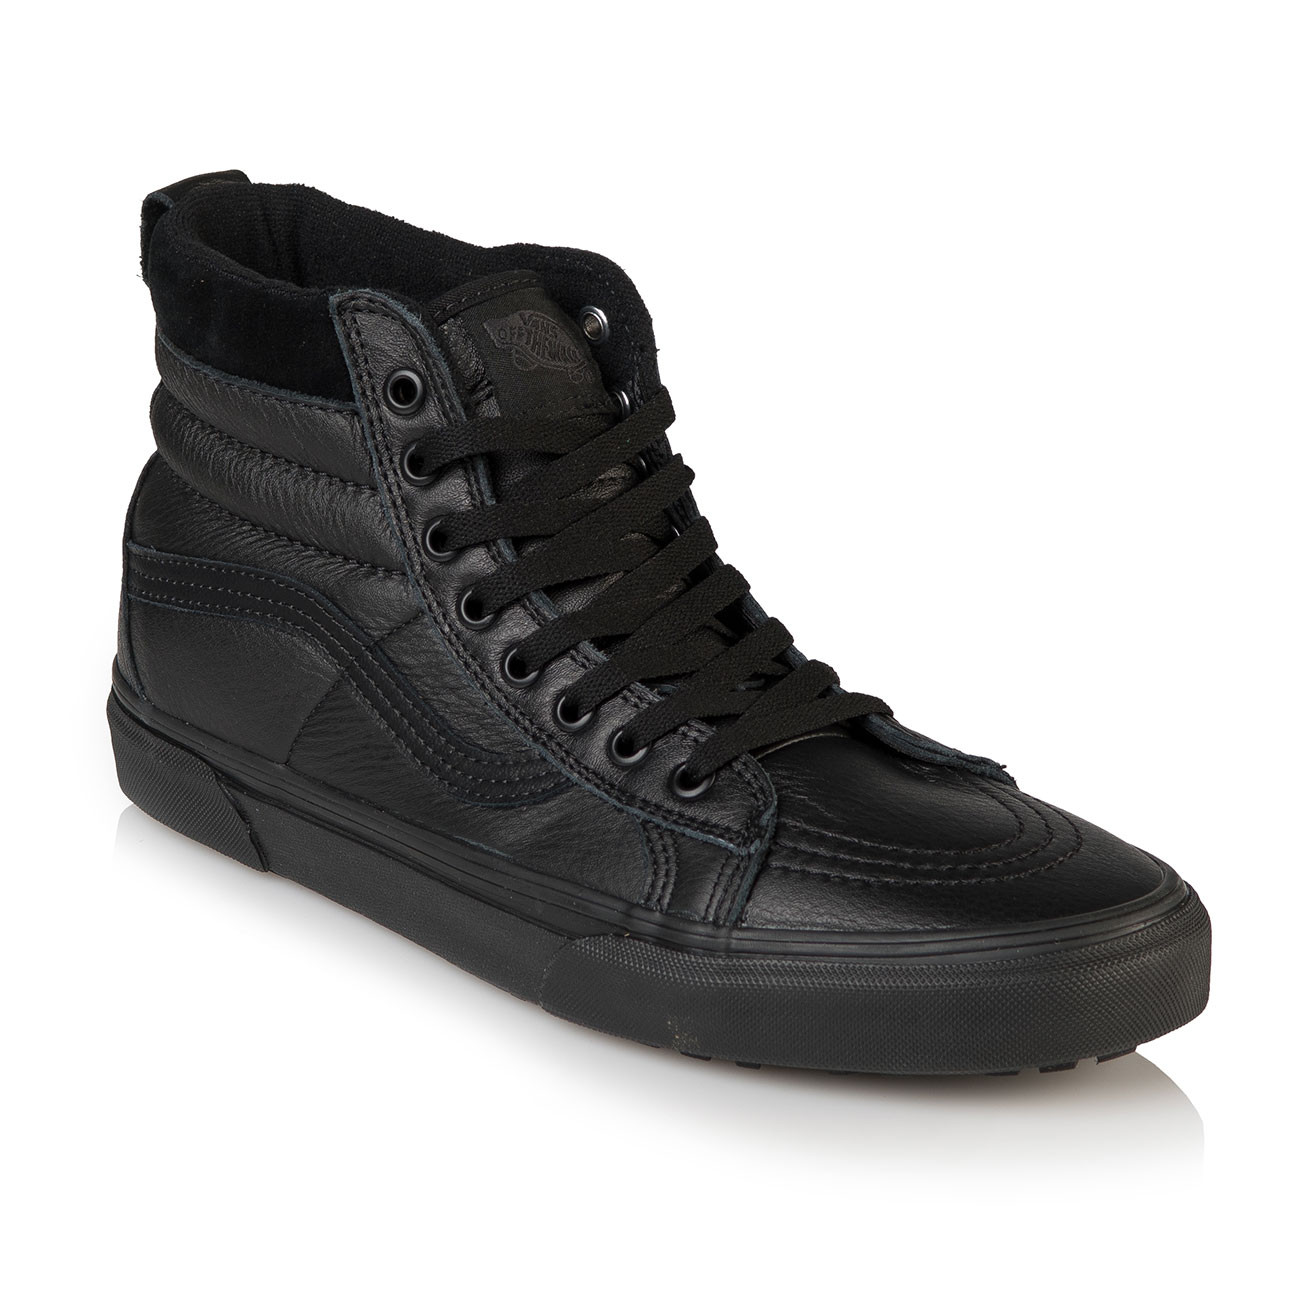 Winter shoes Vans Sk8-Hi MTE leather/black | Snowboard Zezula